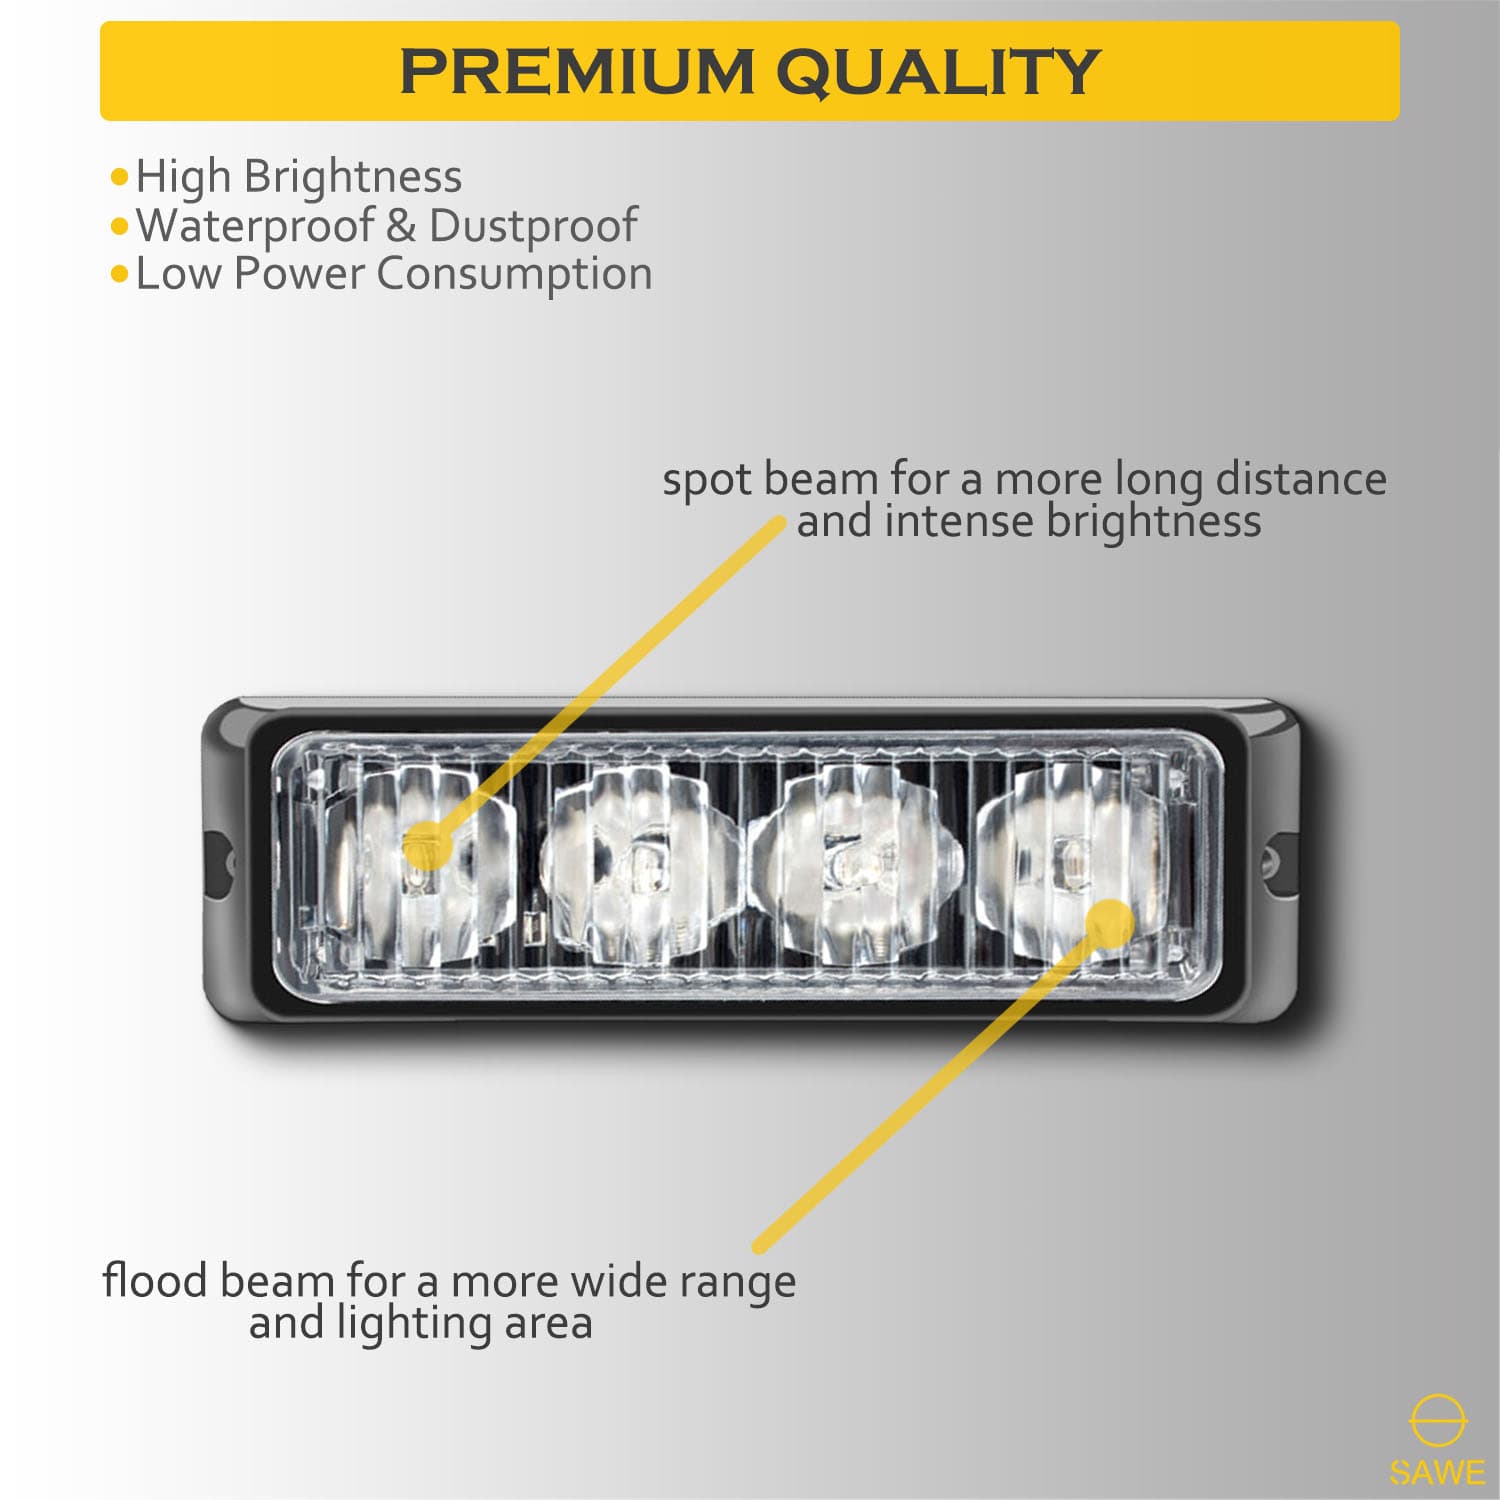 Premier Emergency LED Strobe Lights Bar for Offroad Car Truck Warning Hazard Flash Grille and Surface Mount Light - White 4-LED